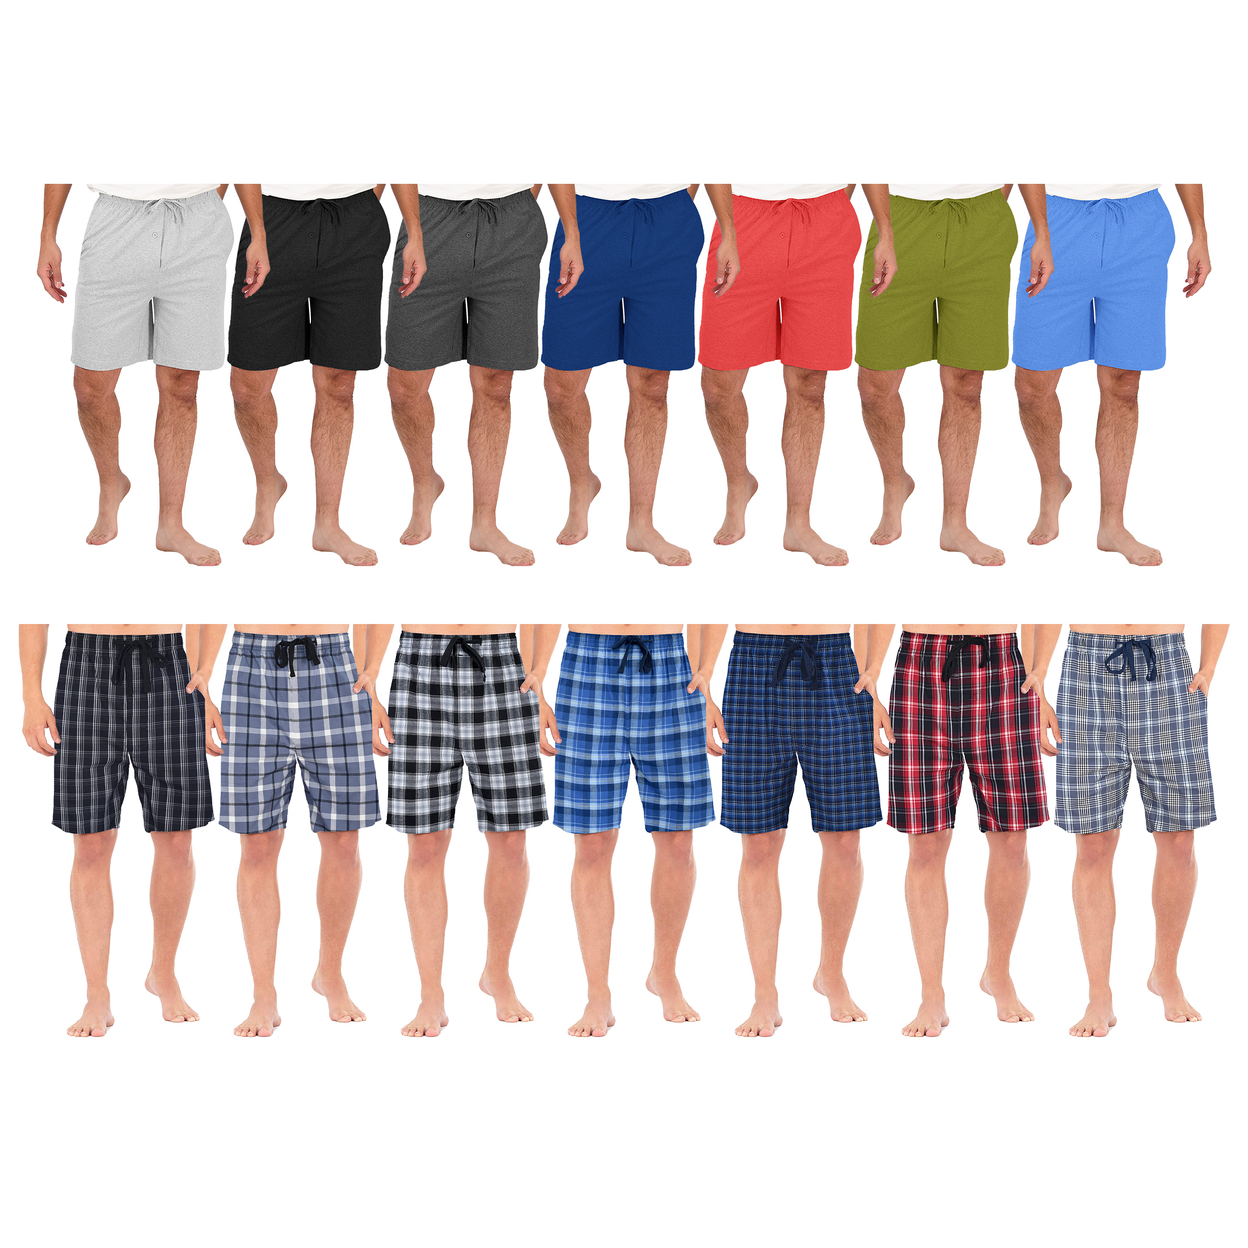 Multi-Pack: Men's Ultra Soft Knit Lounge Pajama Sleep Shorts - Plaid, 3-pack, Large